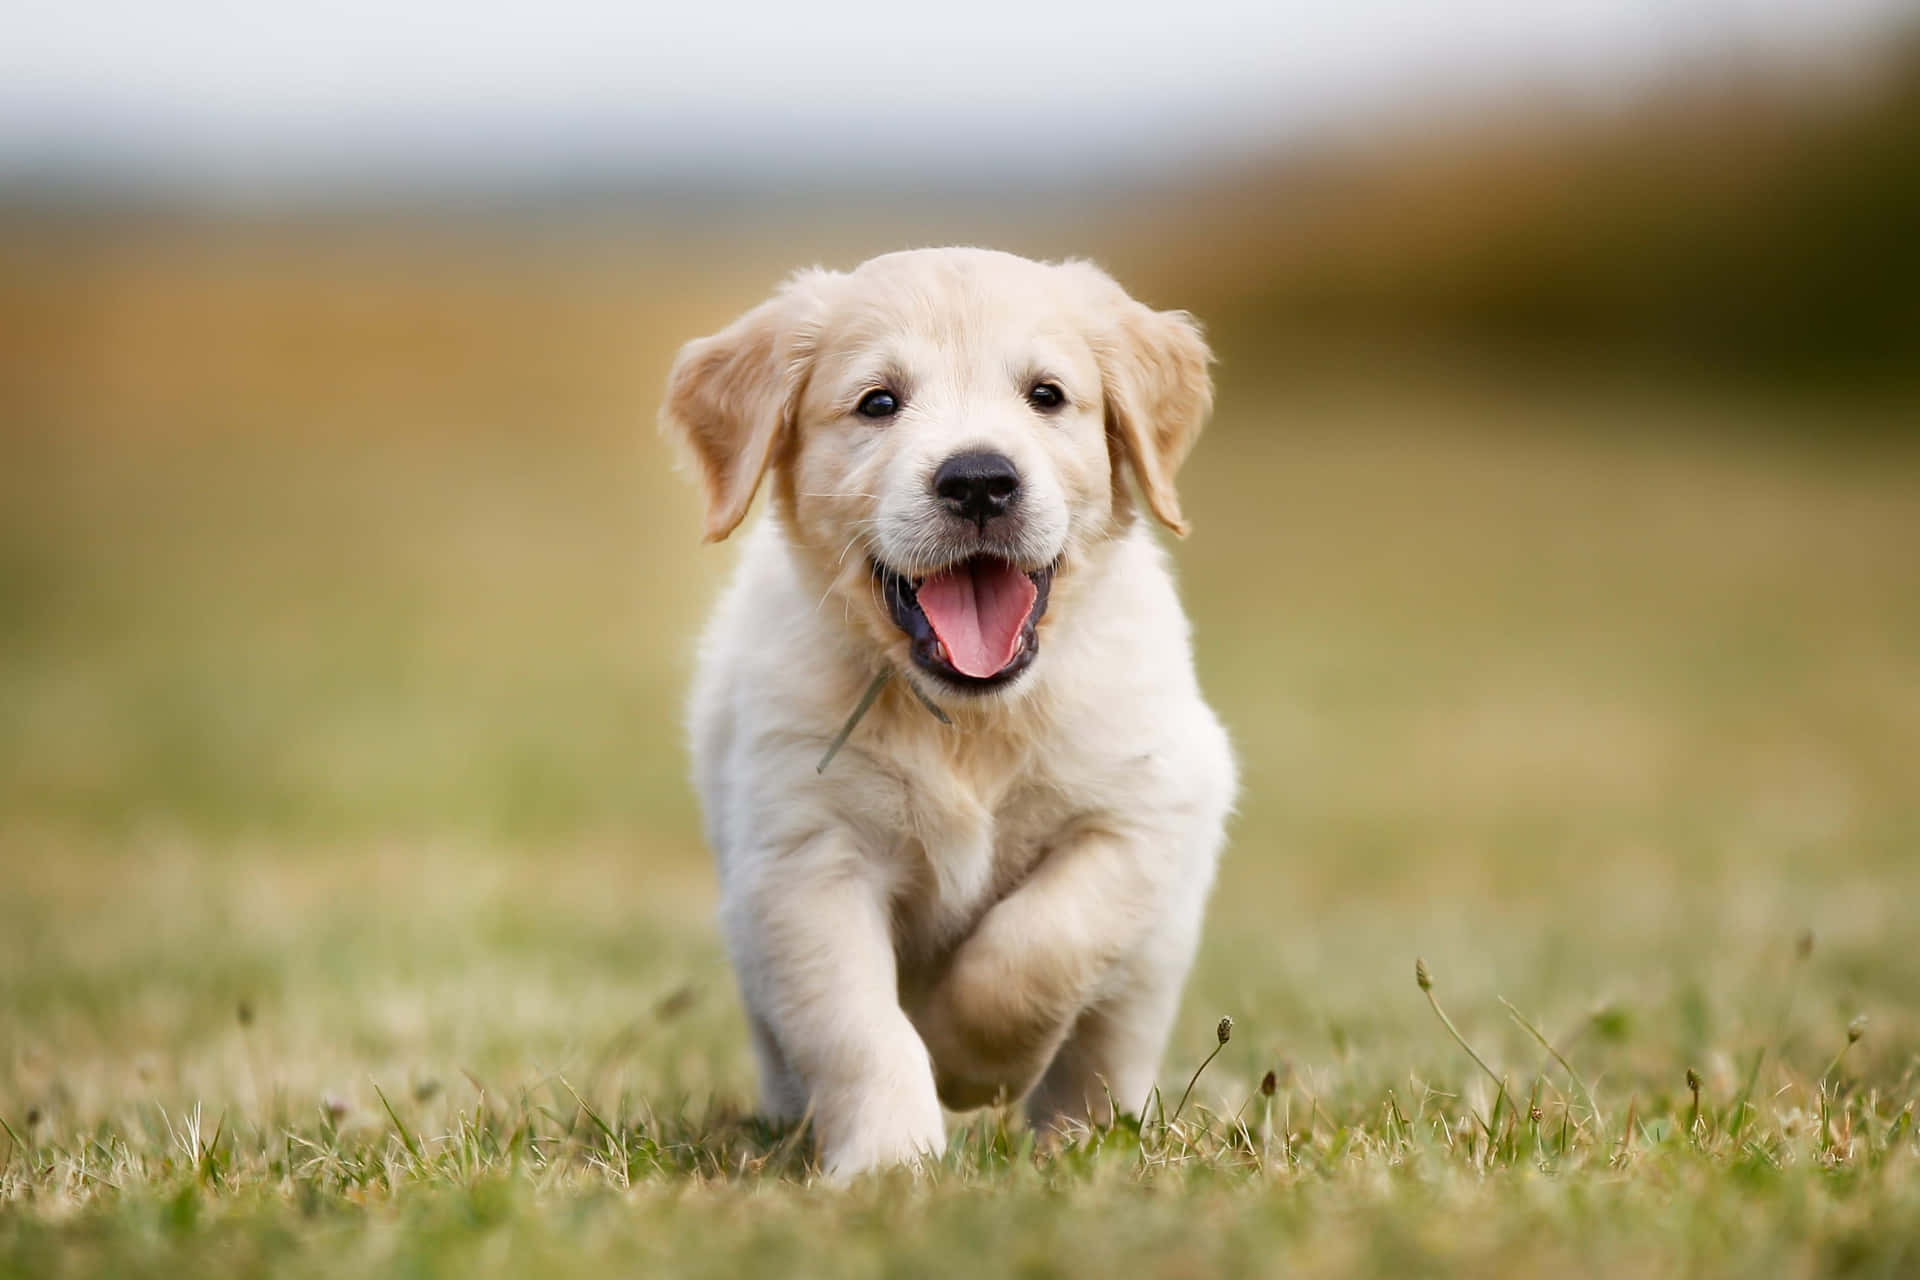 Imagende Un Cachorro De Labrador Retriever Corriendo.